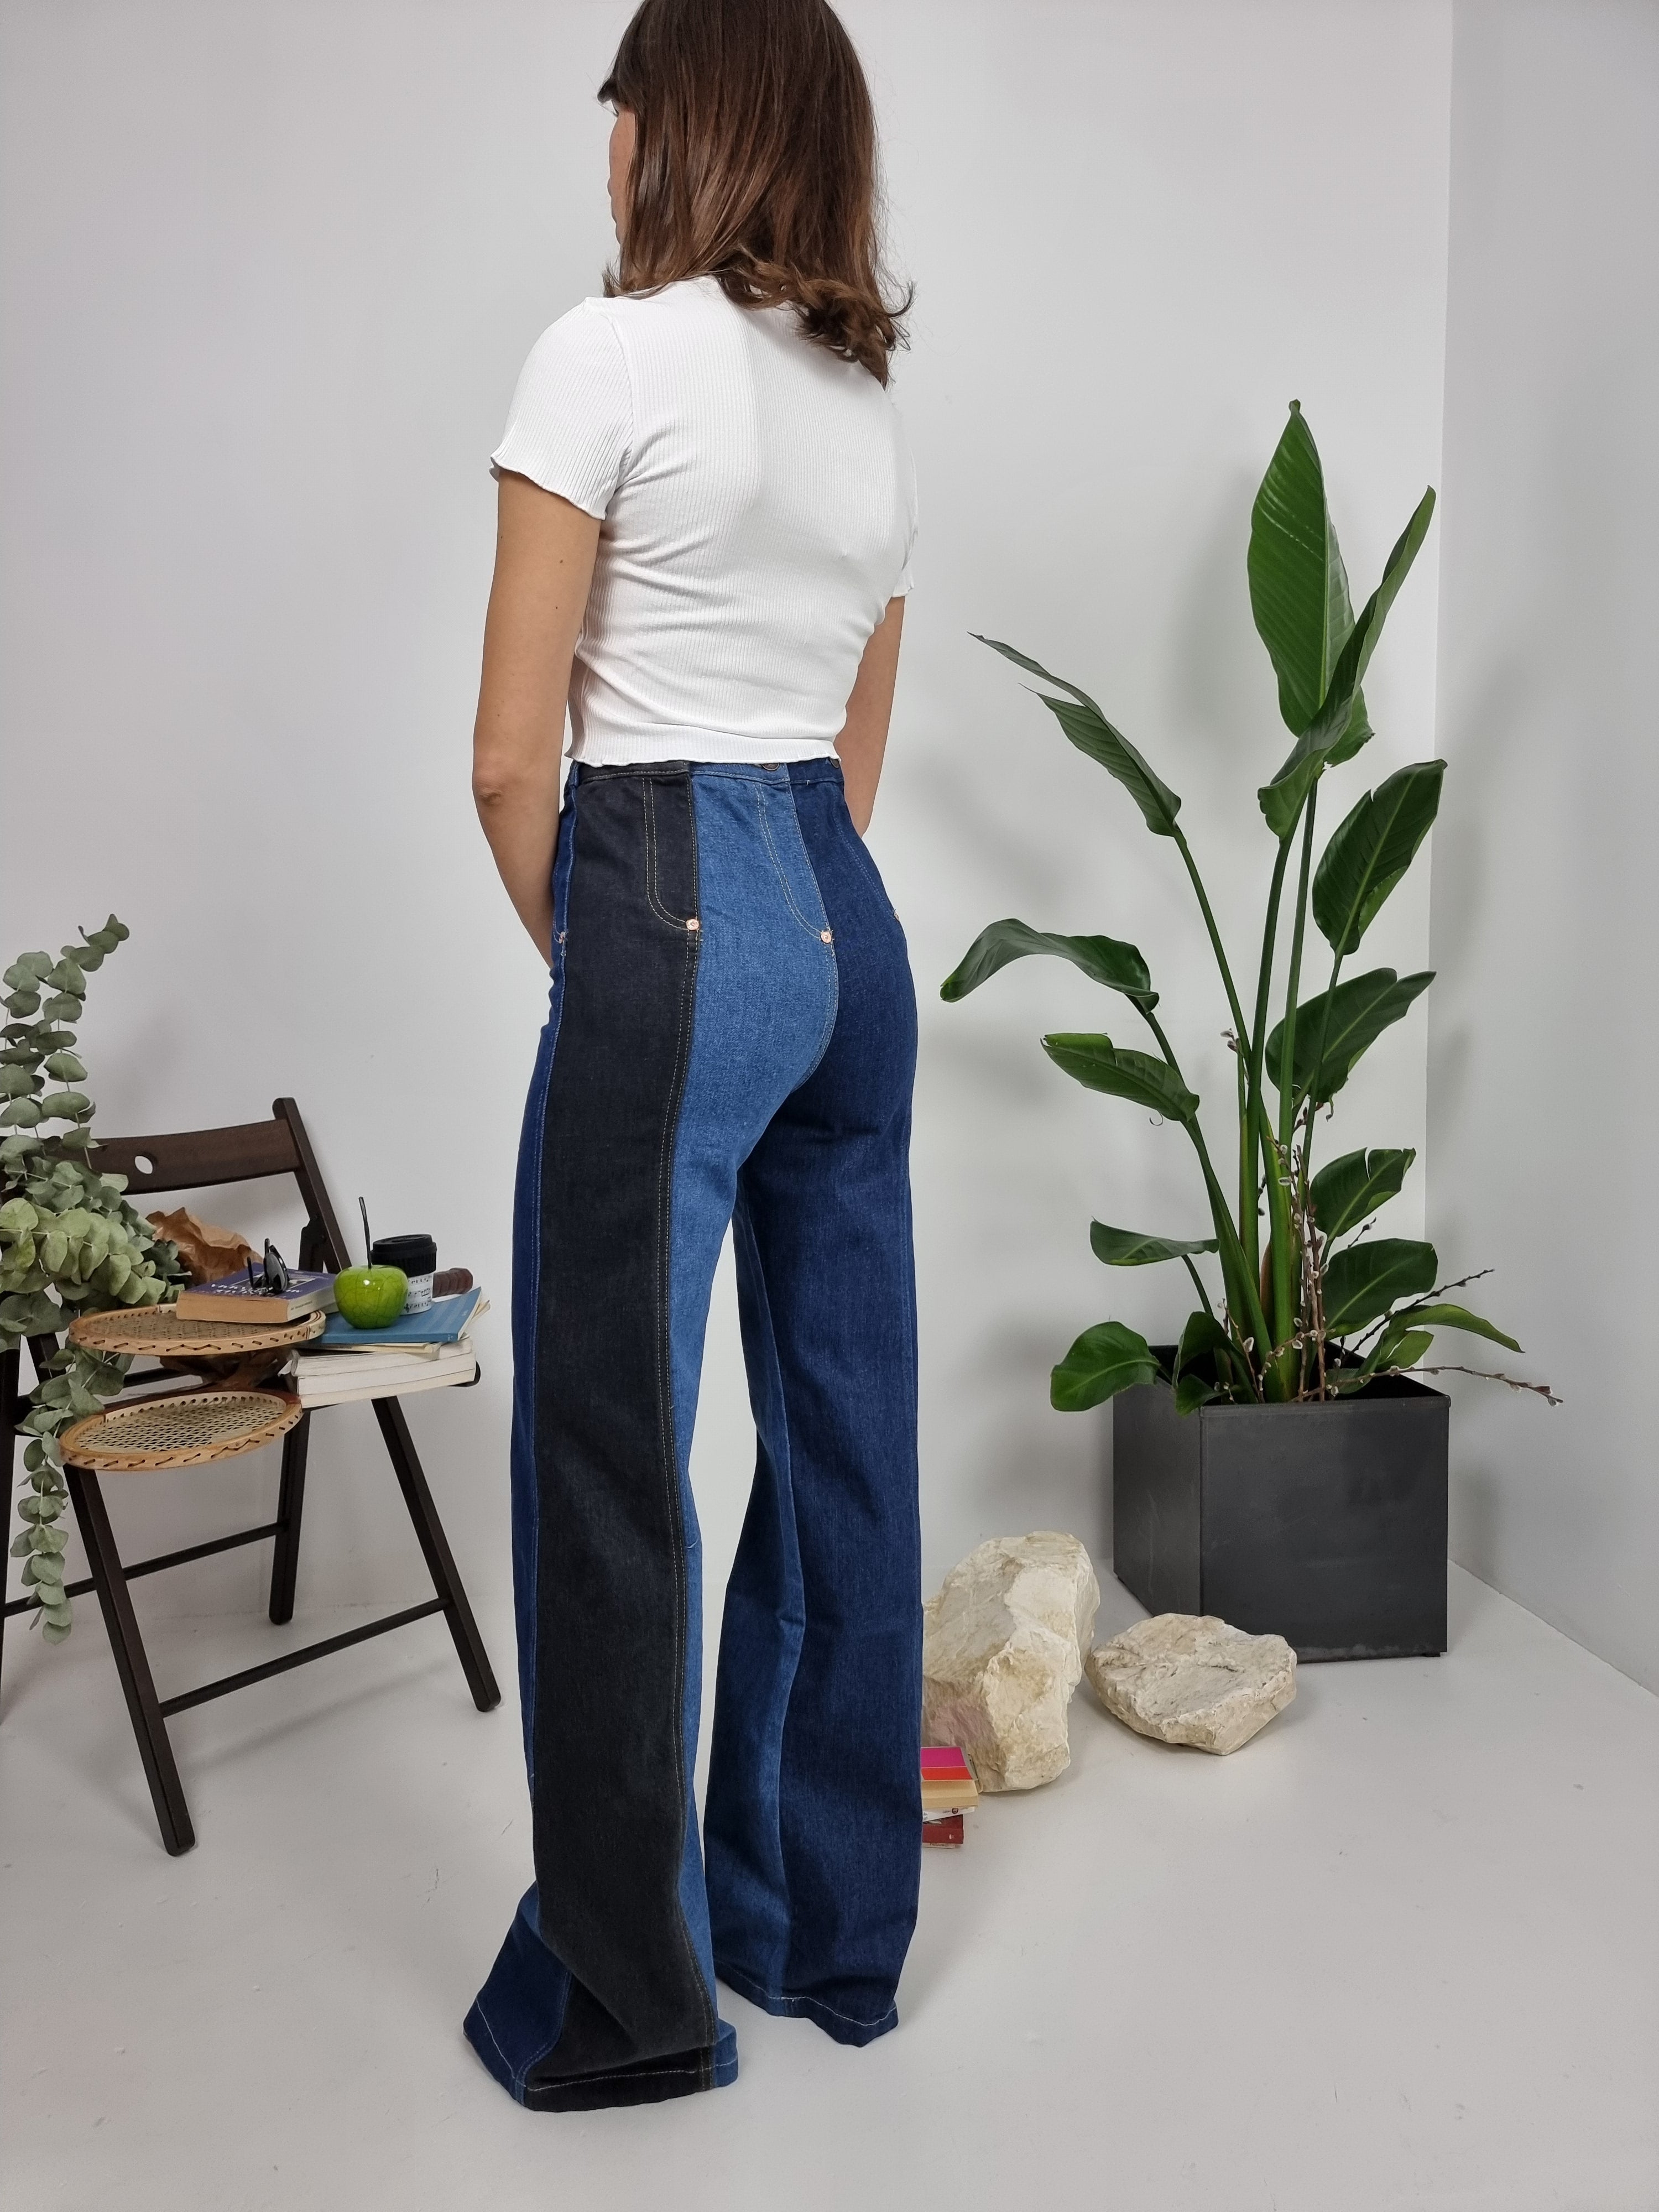 Moschino Jeans – T-shirt costina cotone bianco